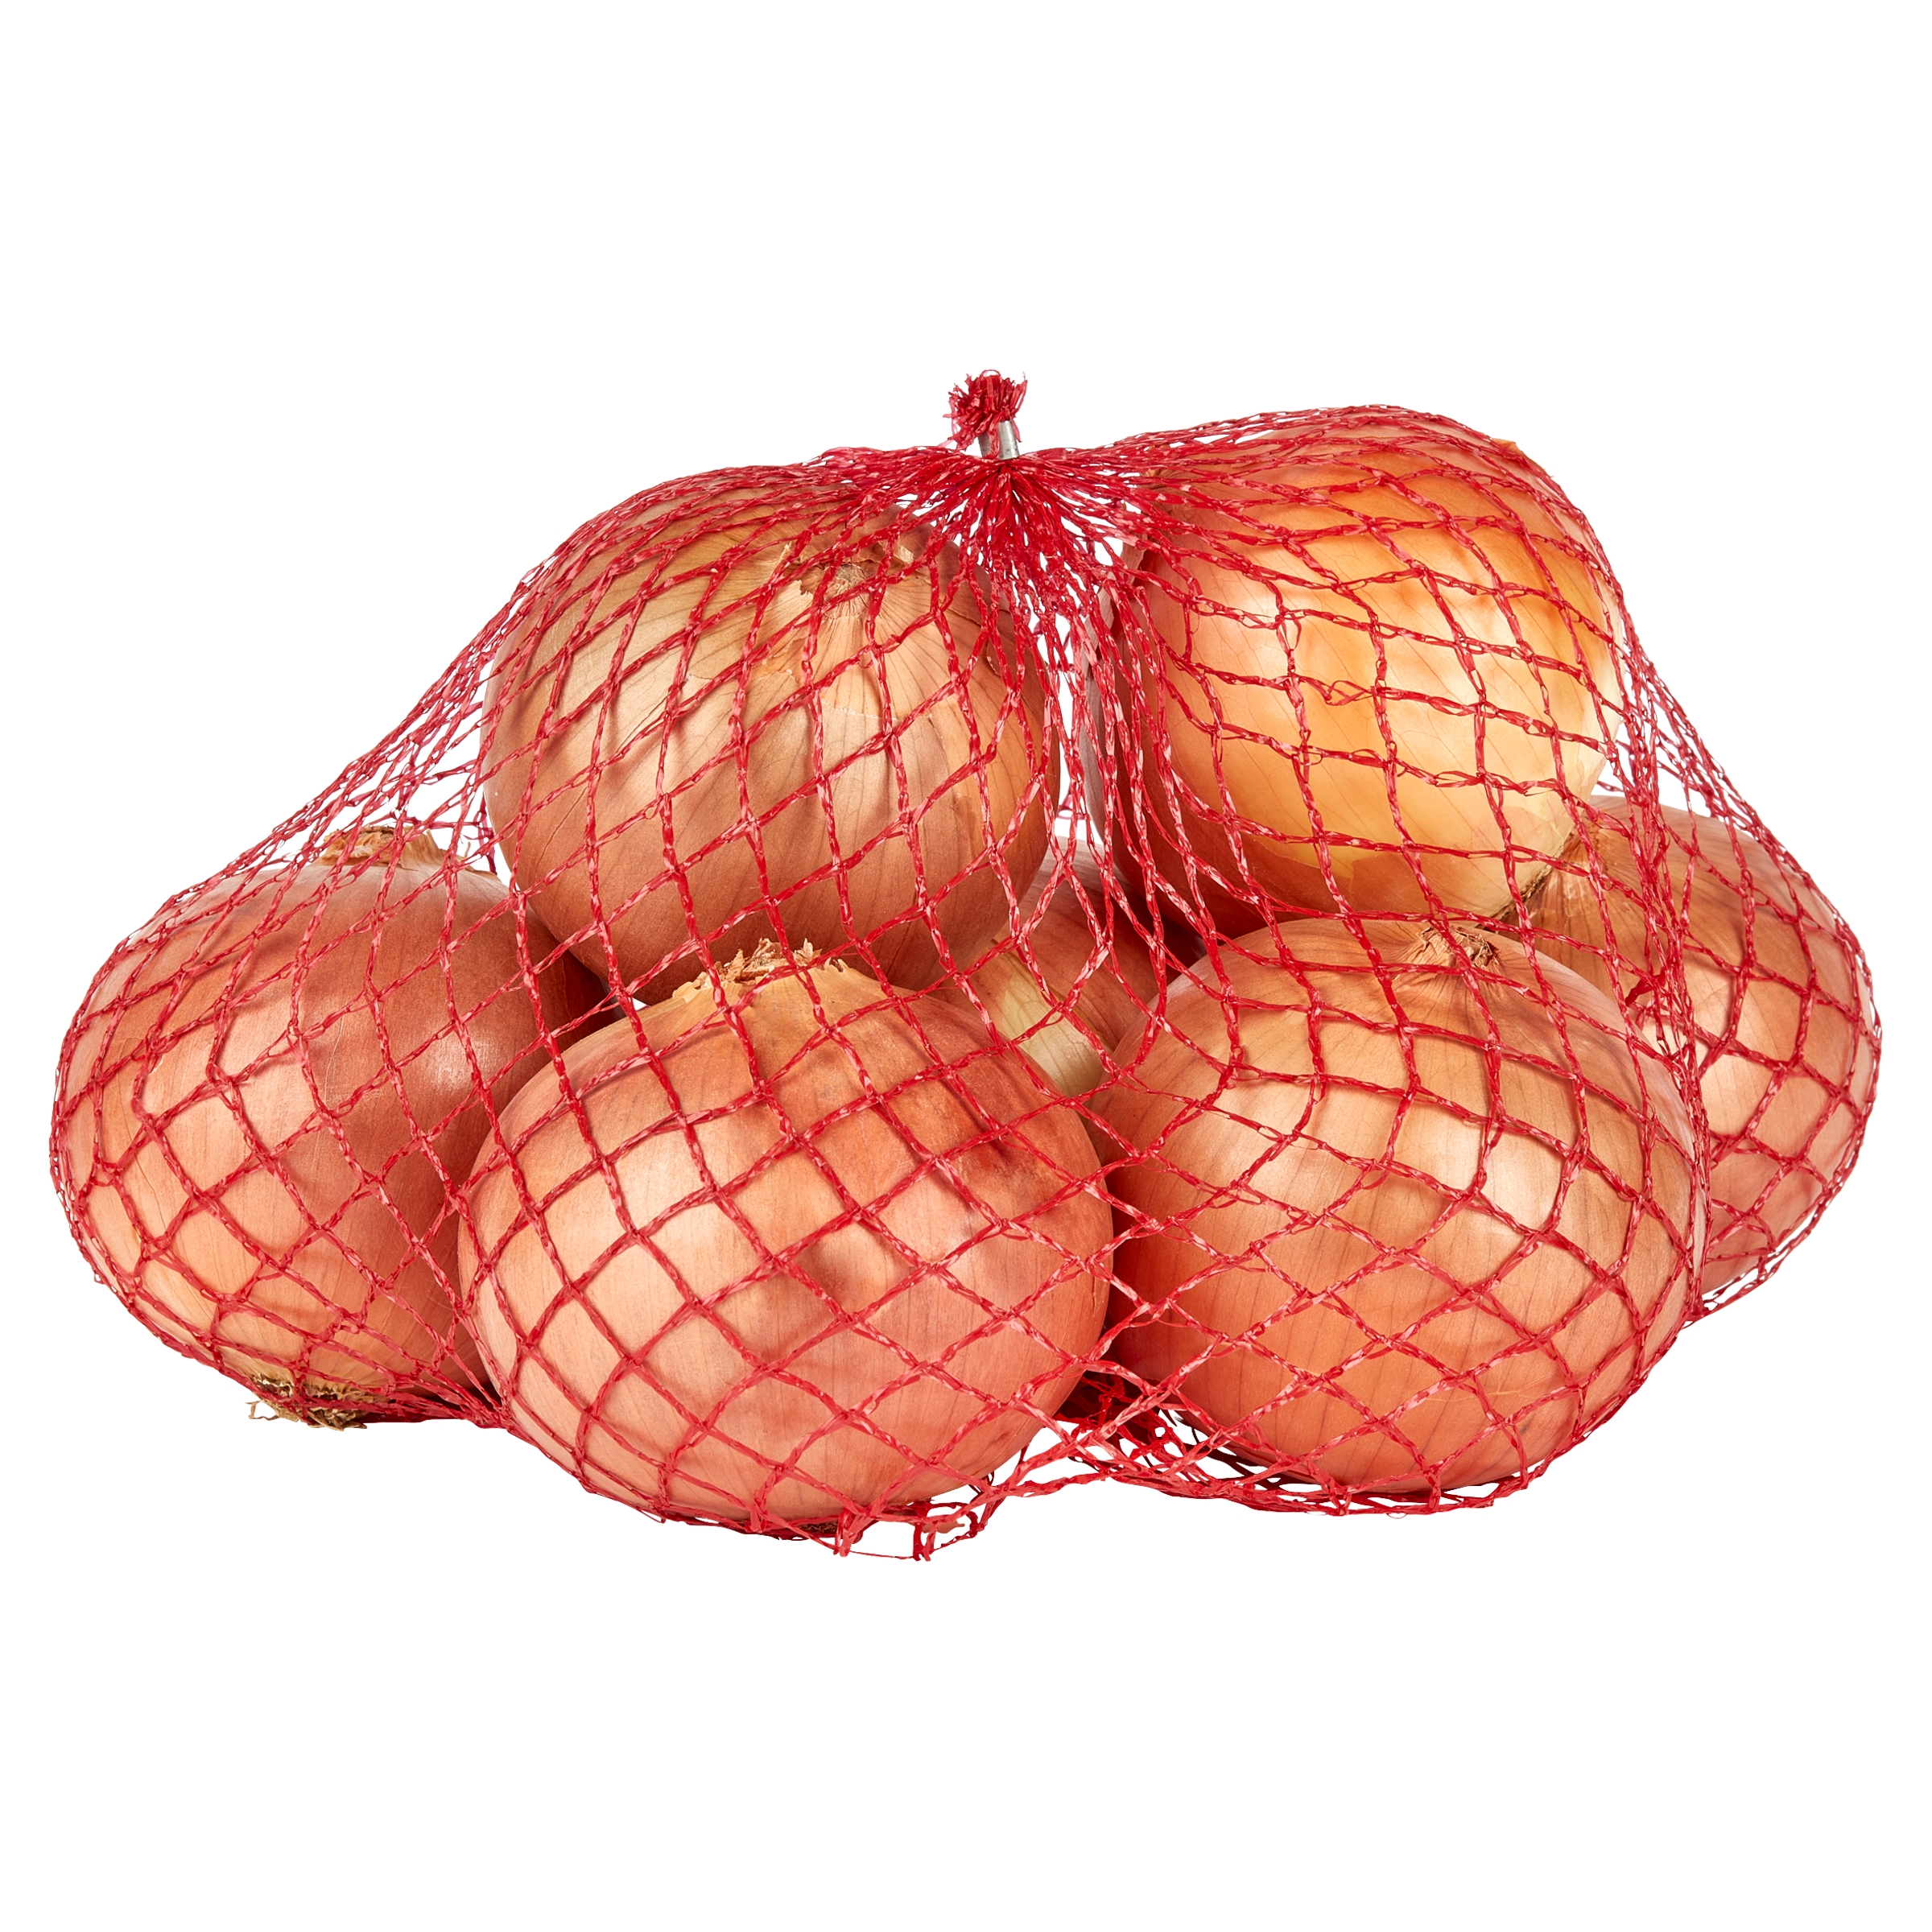 Fresh Yellow Onions, 3 lb Bag - image 1 of 4